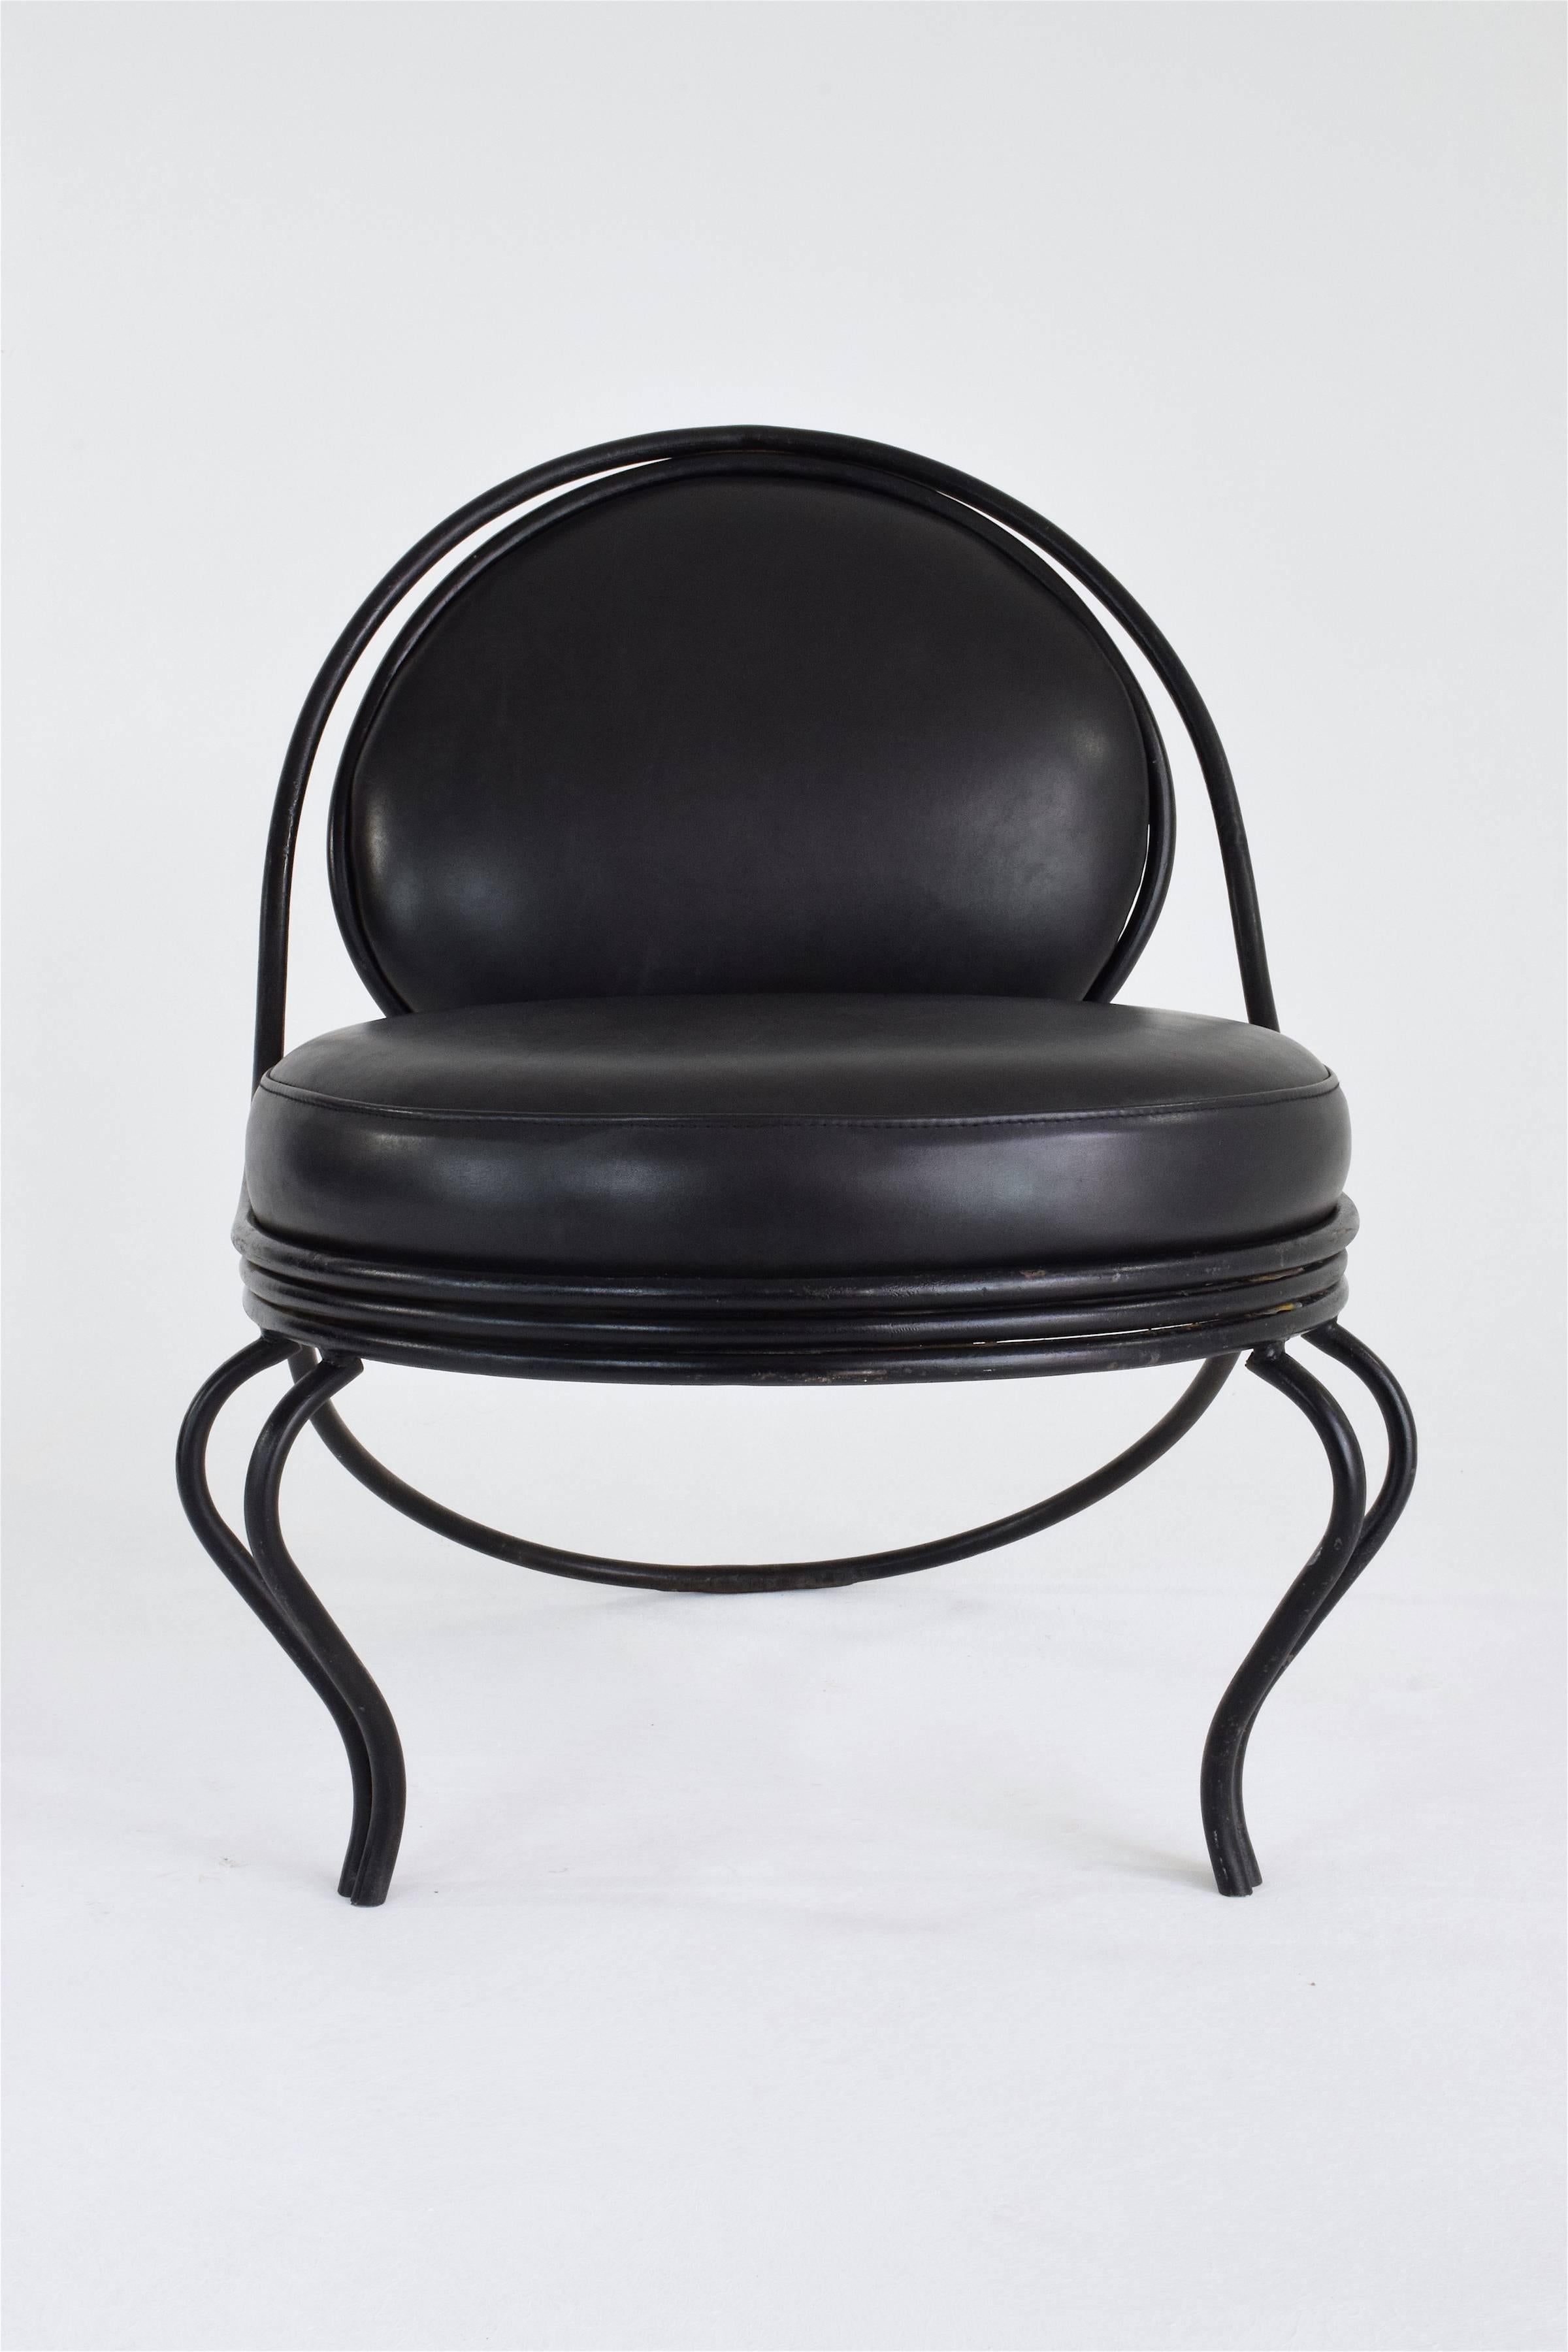 20th Century Rare Midcentury Copacabana Chair by Mathieu Matégot, 1955 For Sale